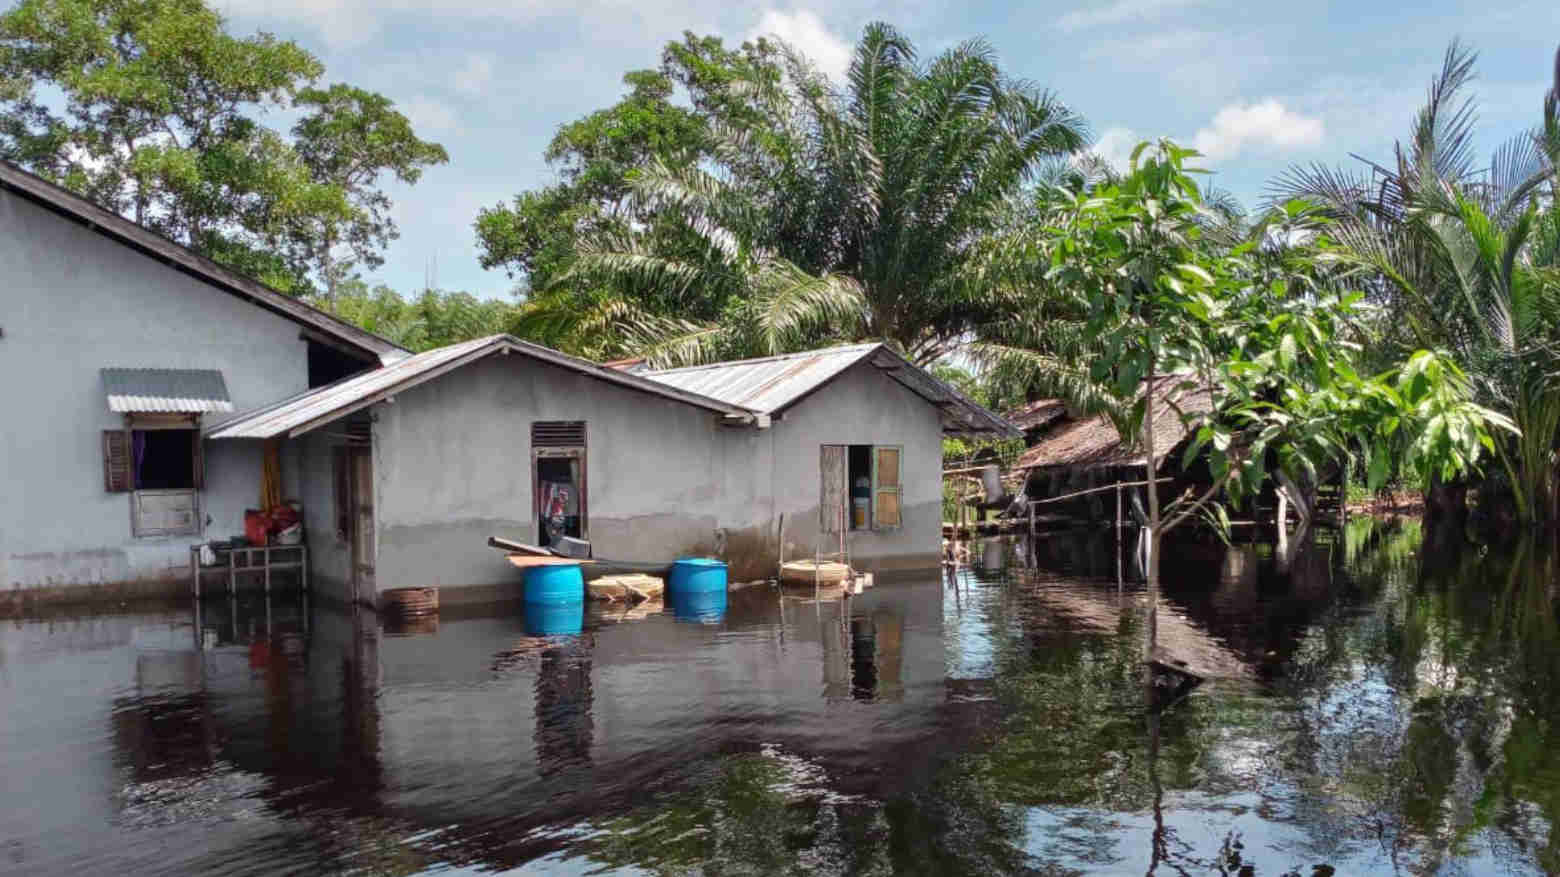 Sepekan Mempawah Direndam Banjir, Bupati Tetapkan Status Tanggap Darurat